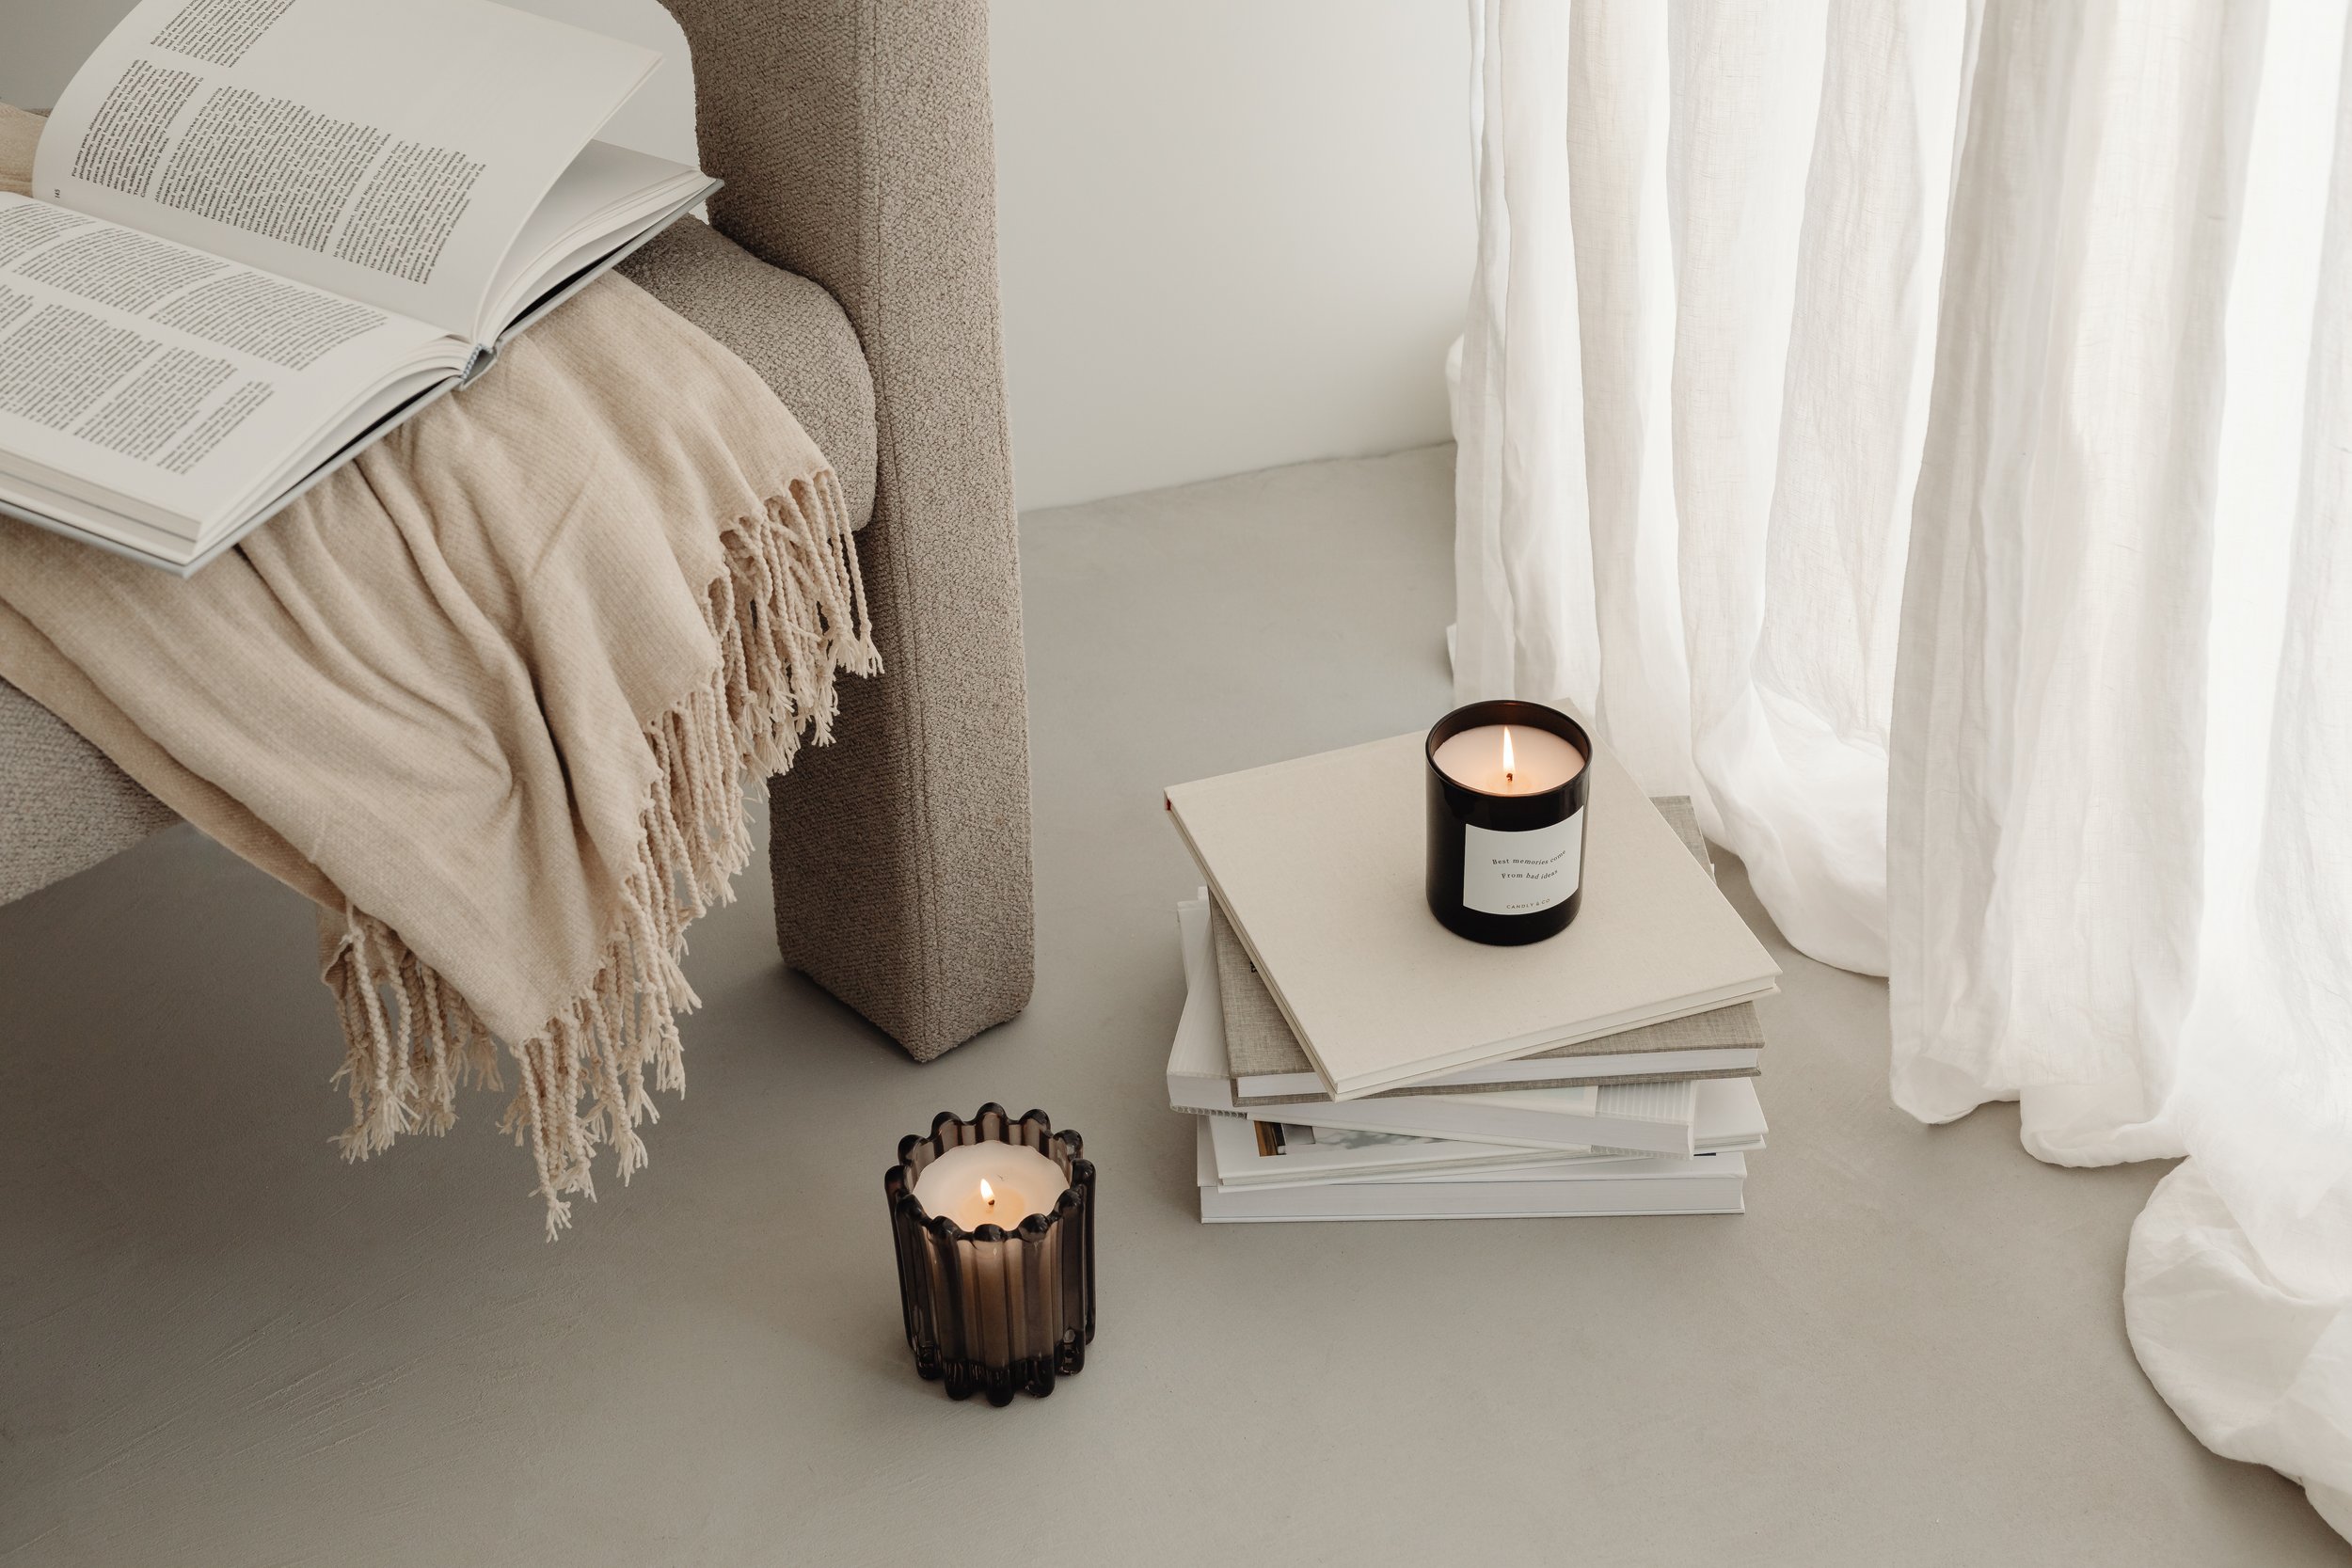 kaboompics_home-decorations-beige-armchair-candles-book-blanket-32090.jpg